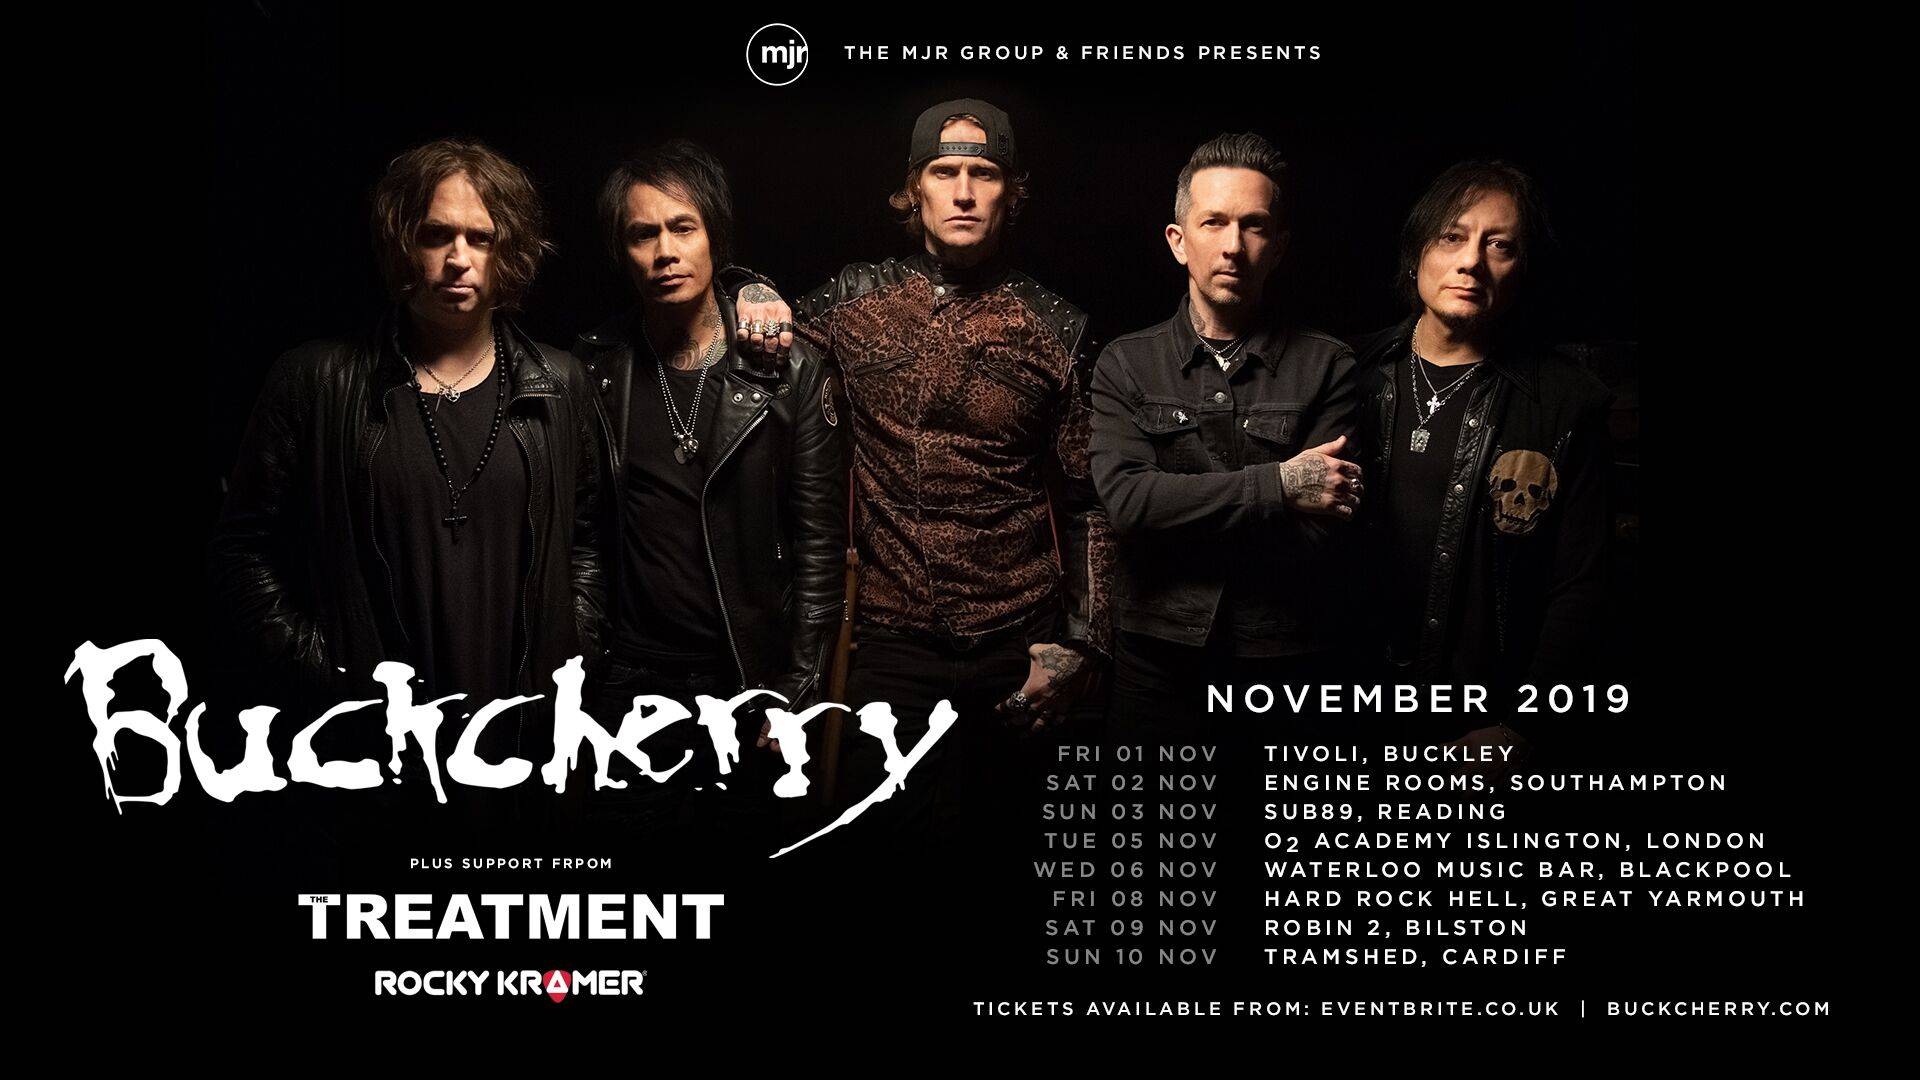 Buckcherry announce UK tour